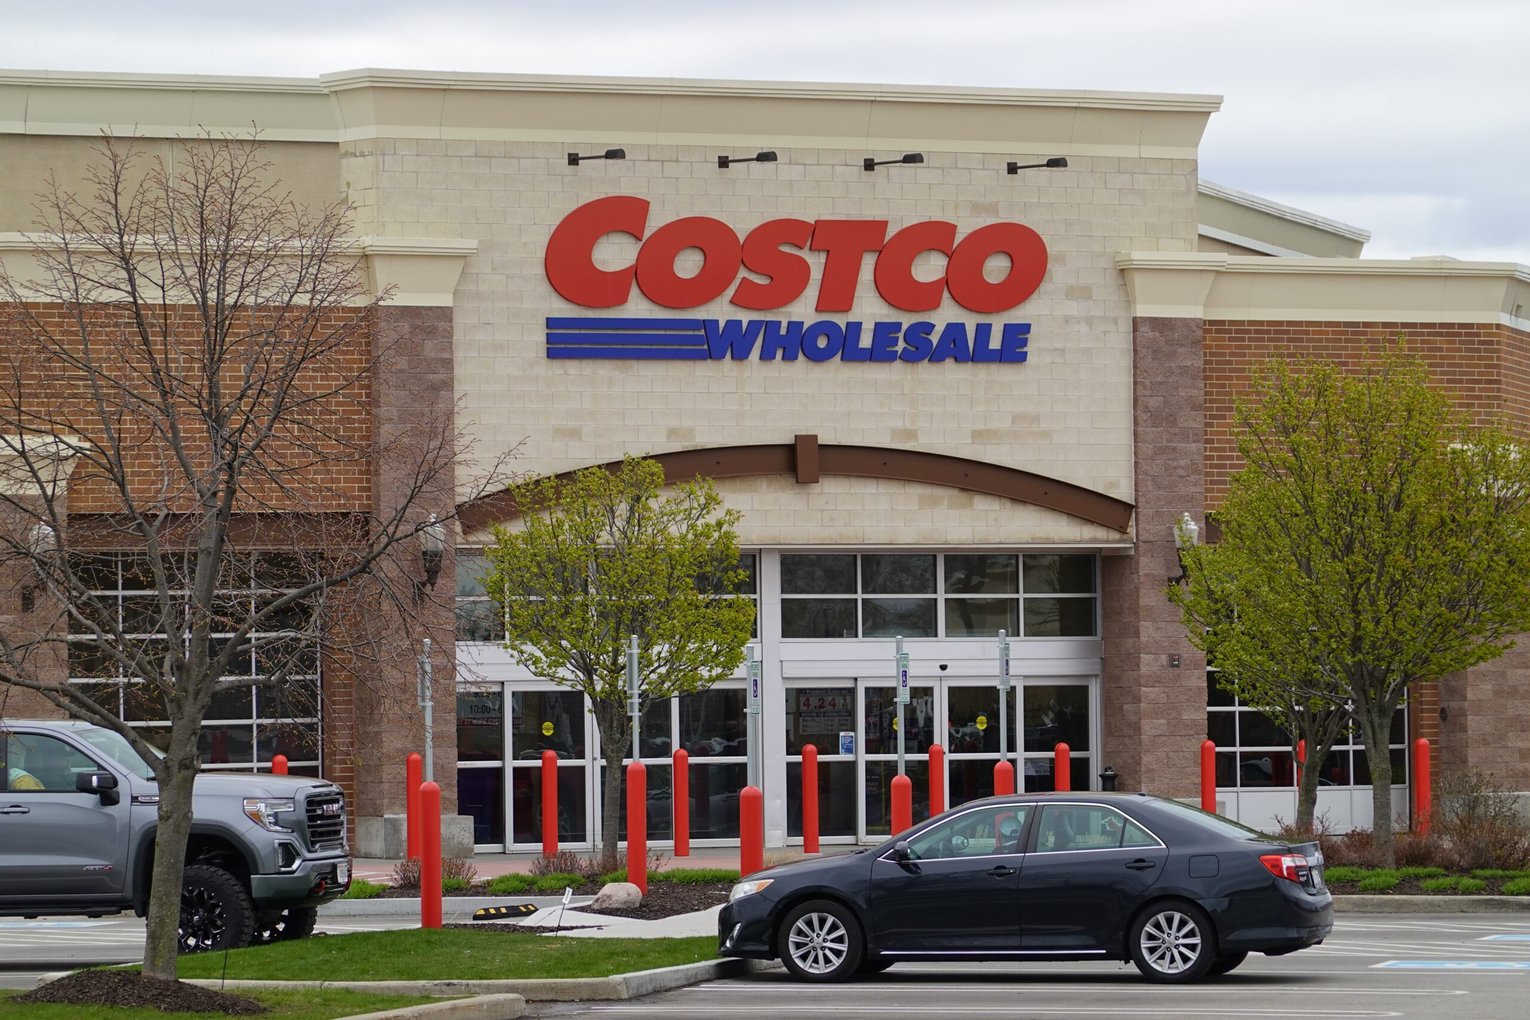 7 Kirkland Signature Items To Avoid at Costco